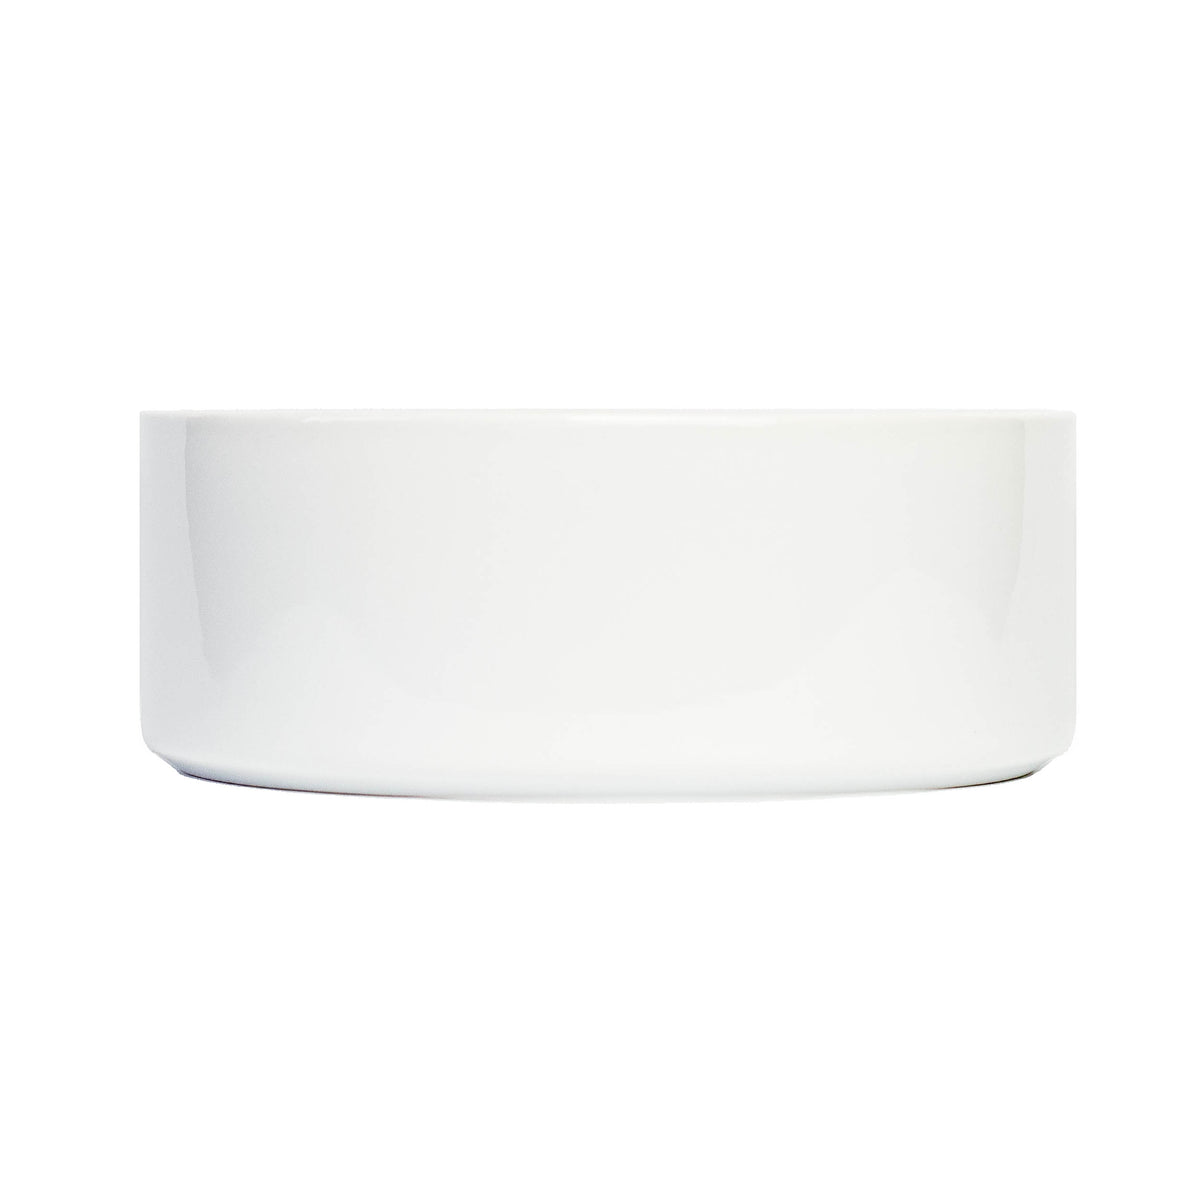 Personalised bowl for cats / ceramic - 22oz 650ml (design 5)